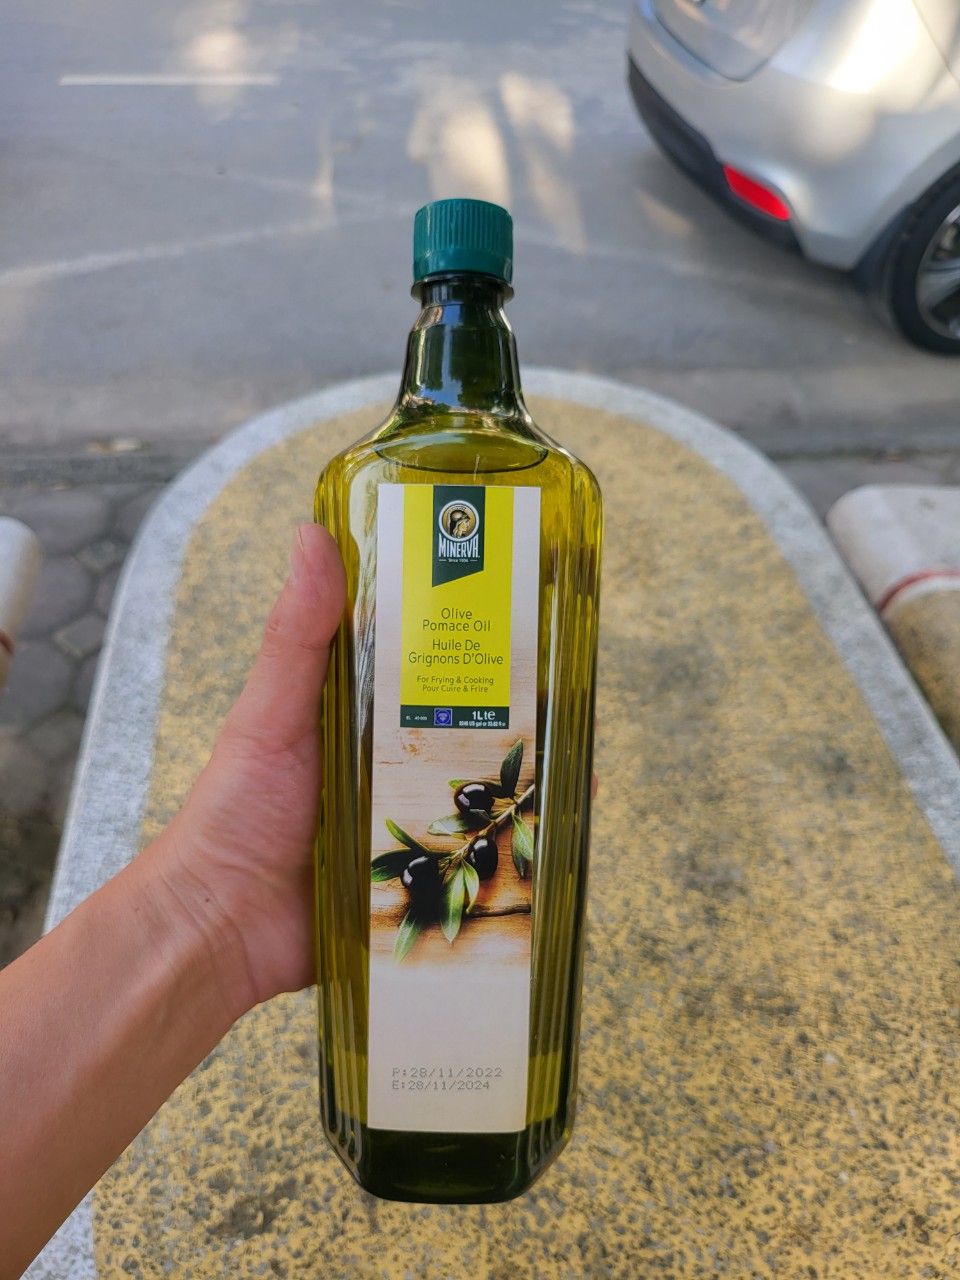 Dầu oliu pomace Palermo 1 lít nhập khẩu Thổ Nhĩ Kỳ